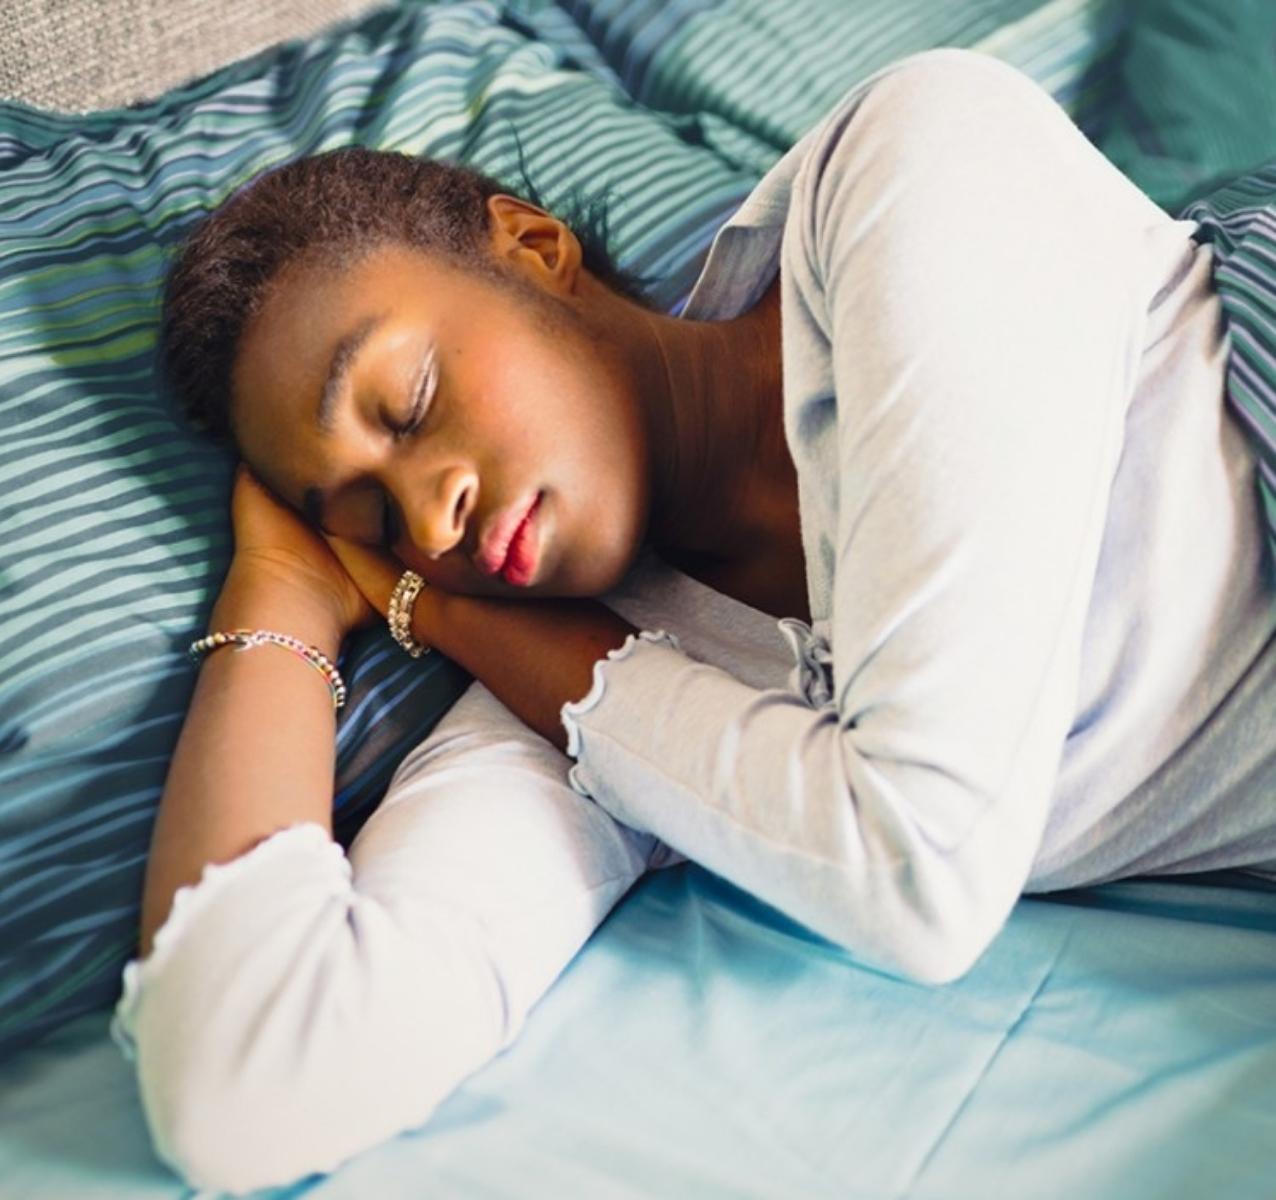 8.Develop healthy sleep habits